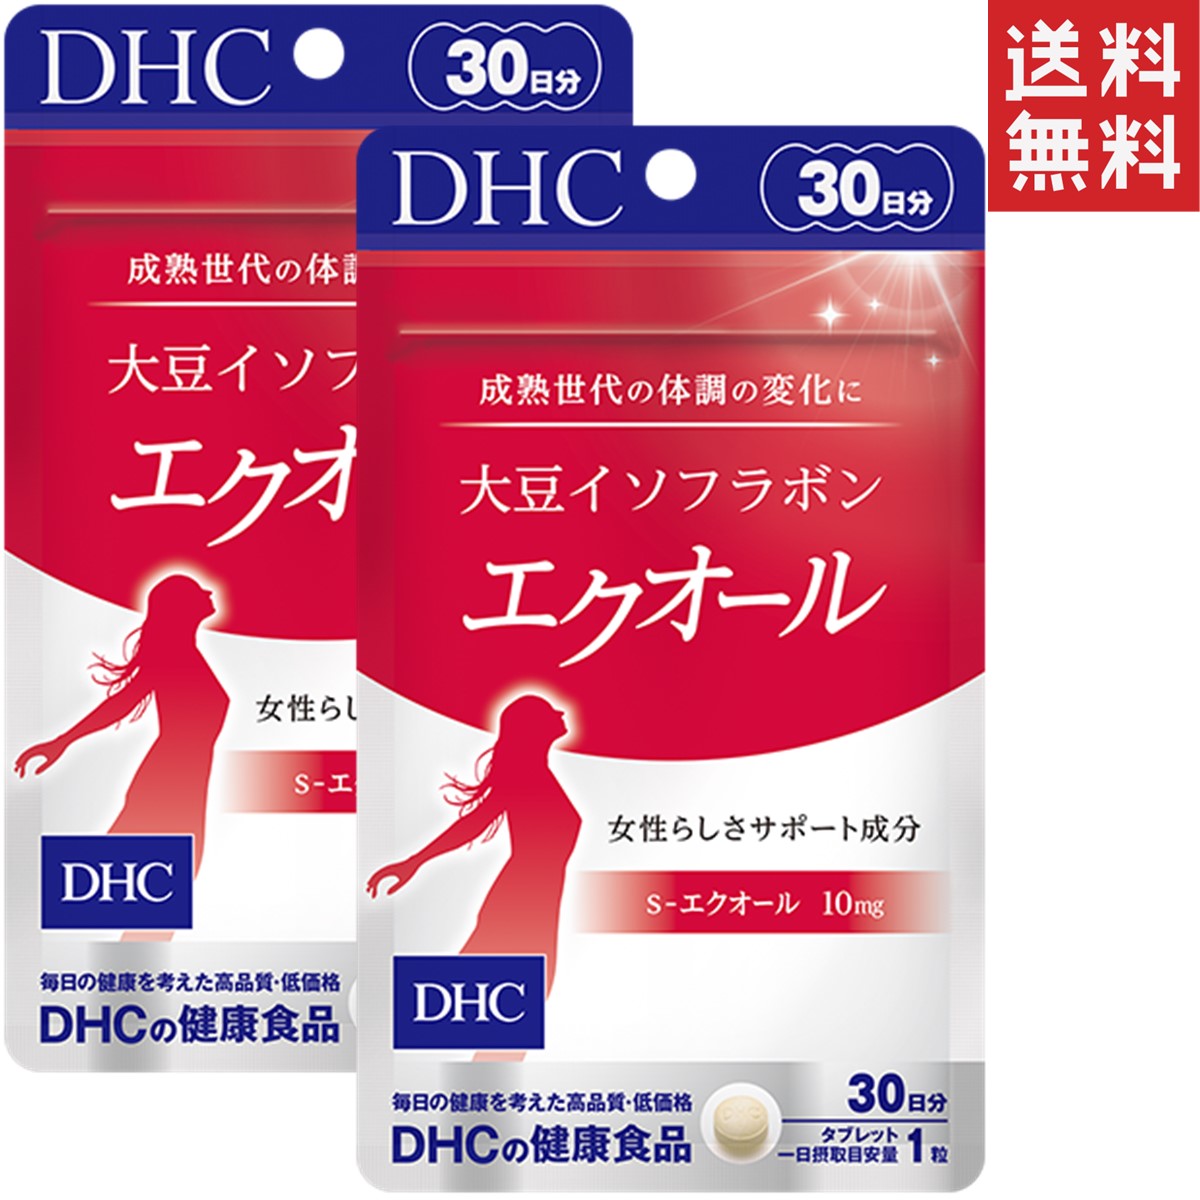 DHC 大豆イソフラボン エクオール 30日分 30粒 × 2個の商品画像